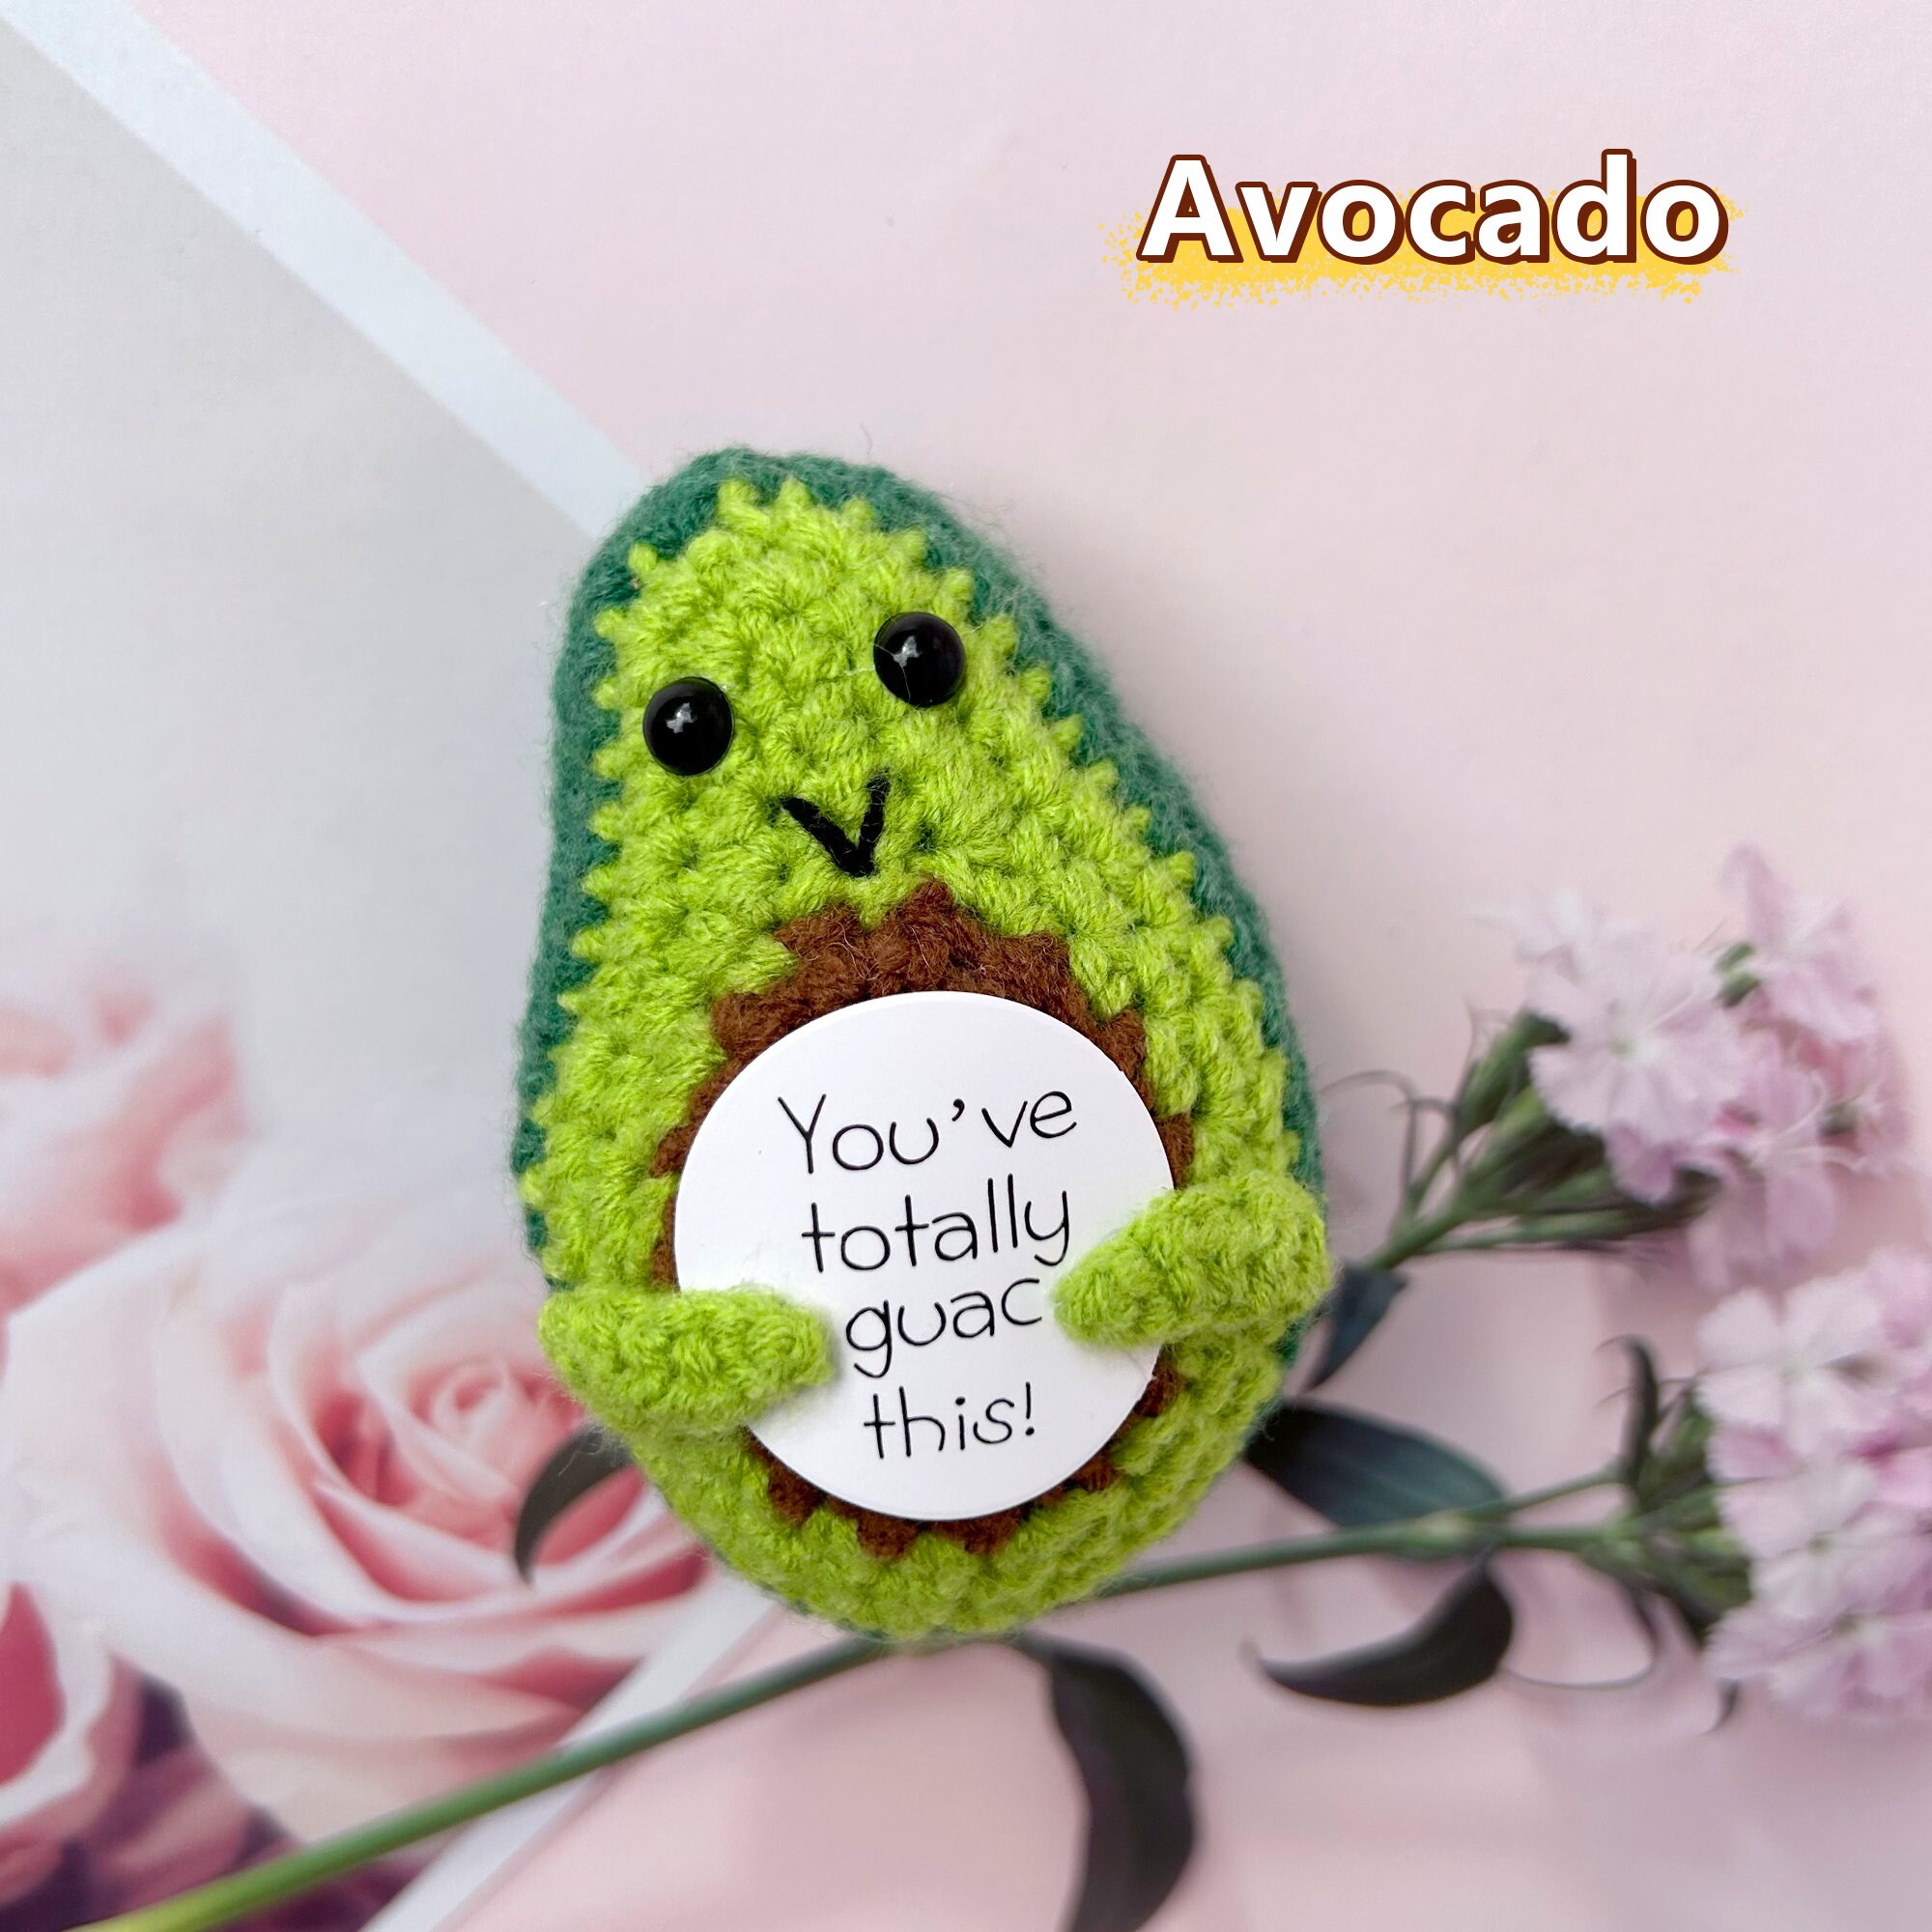  BABORUI Emotional Support Avocado, Positive Emotional Support  Avocado Crochet for Friends/Family, Positive Avocado for  Christmas/Birthdays/Yankee Swap Gifts(1pcs) : Toys & Games